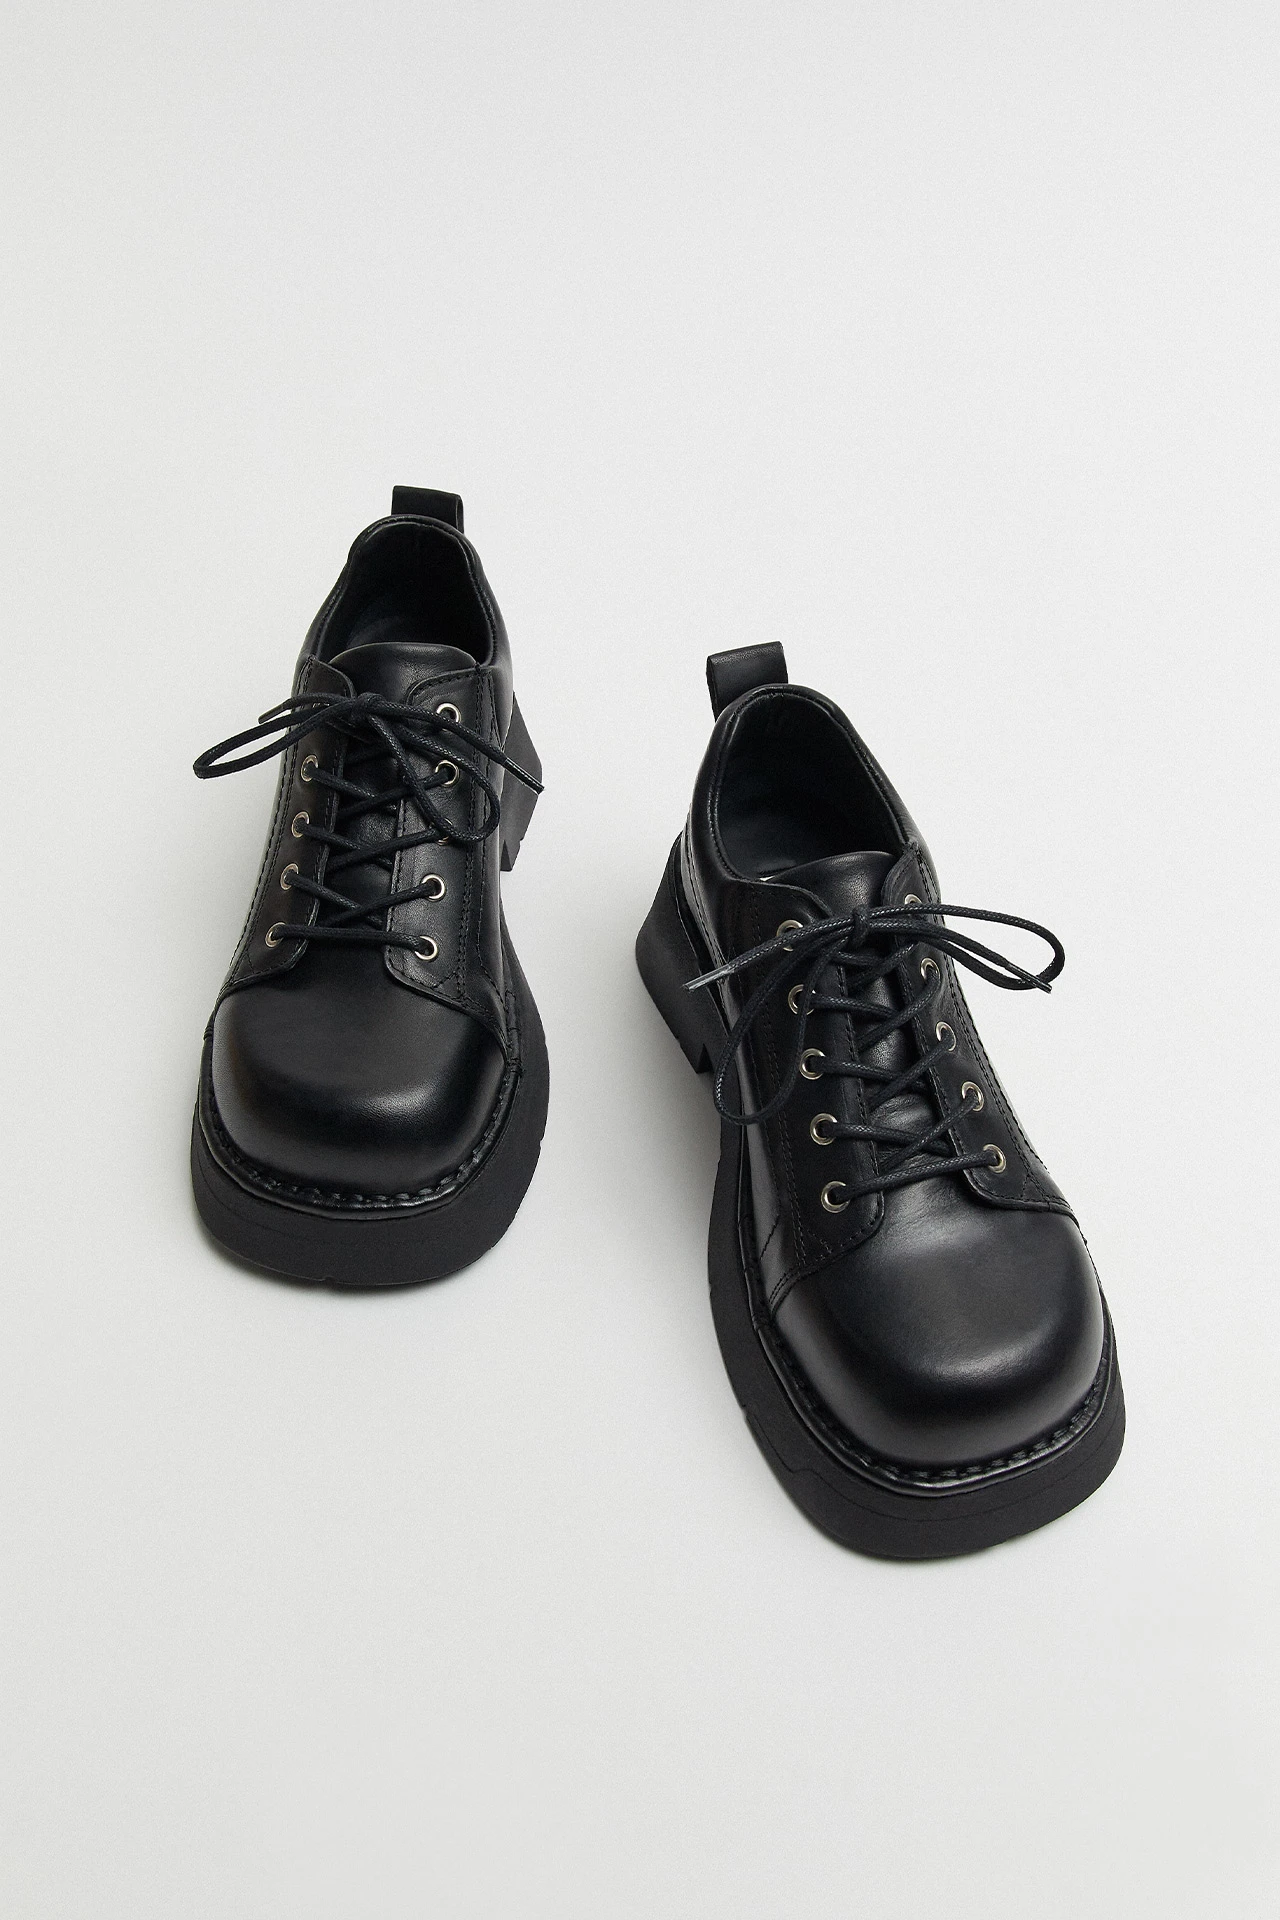 Miista-Erina-Black-Boots-04